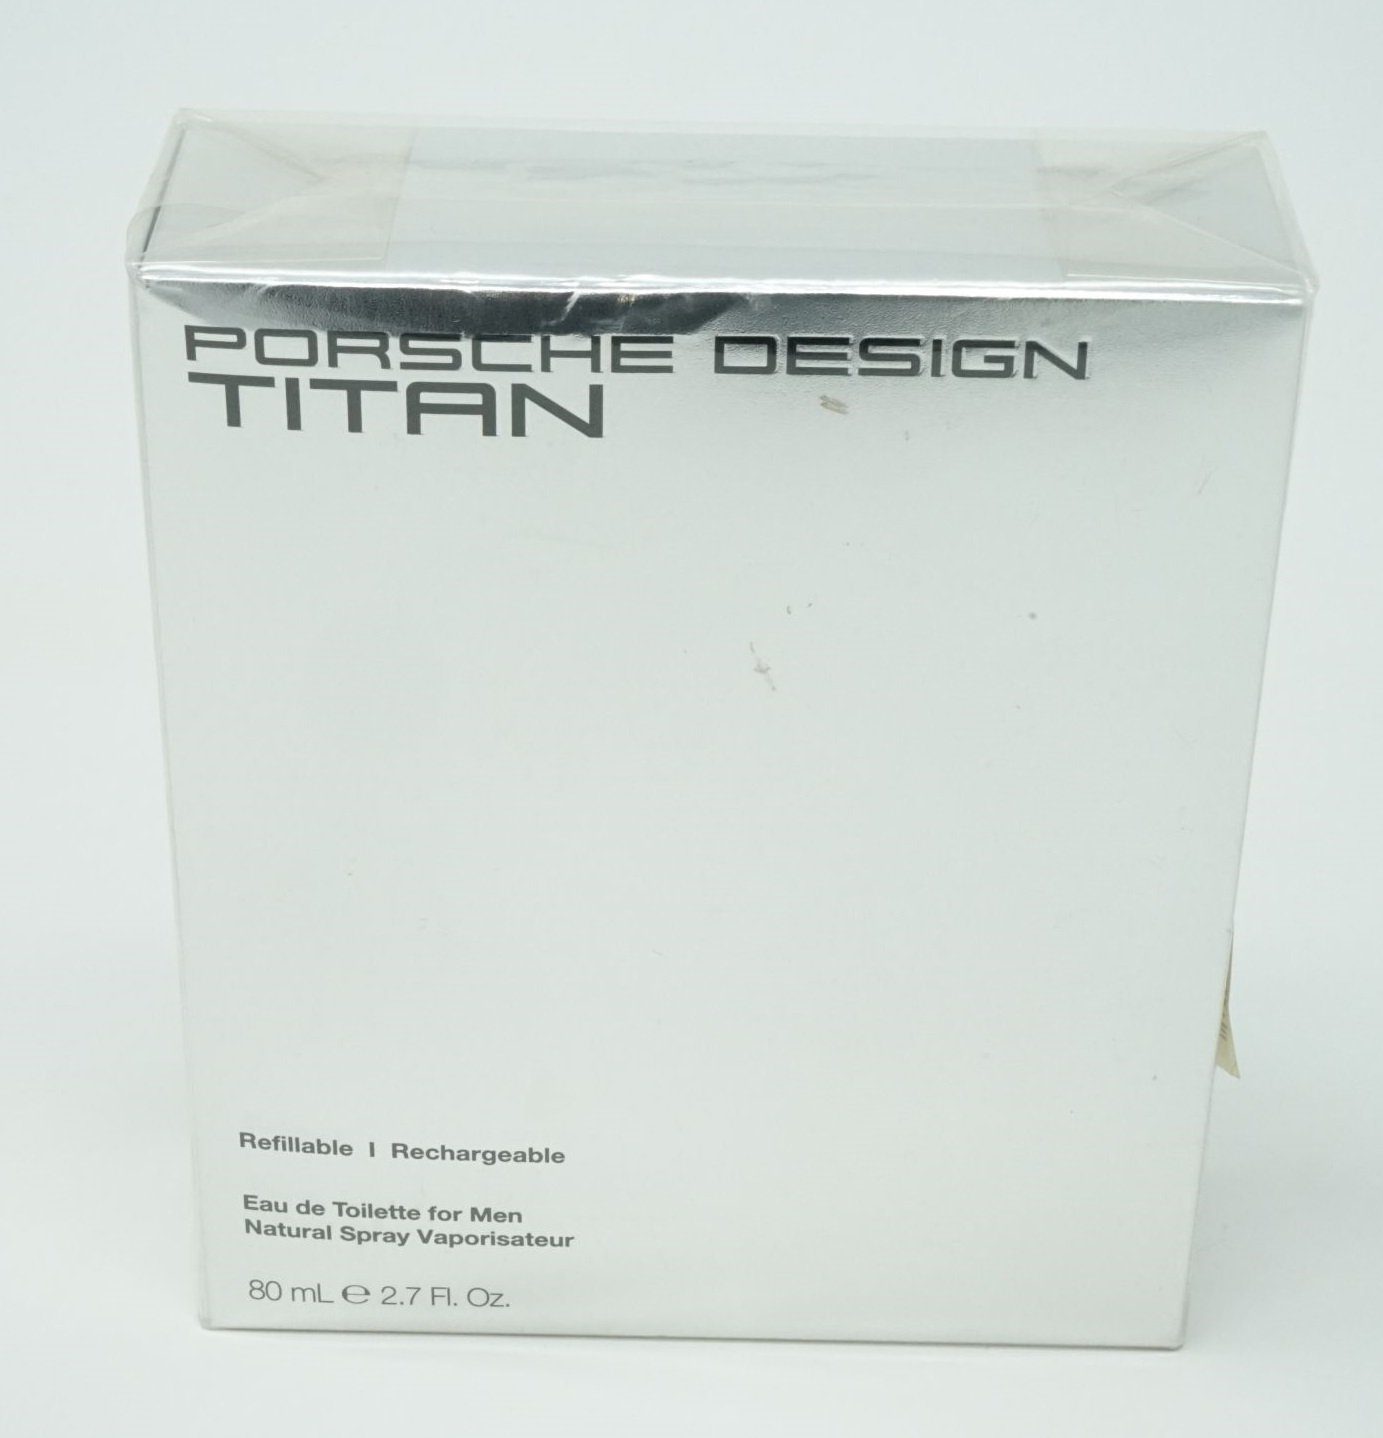 Porsche Eau de Toilette Titan Eau Toilette ml Men Design de Spray Porsche 80 For